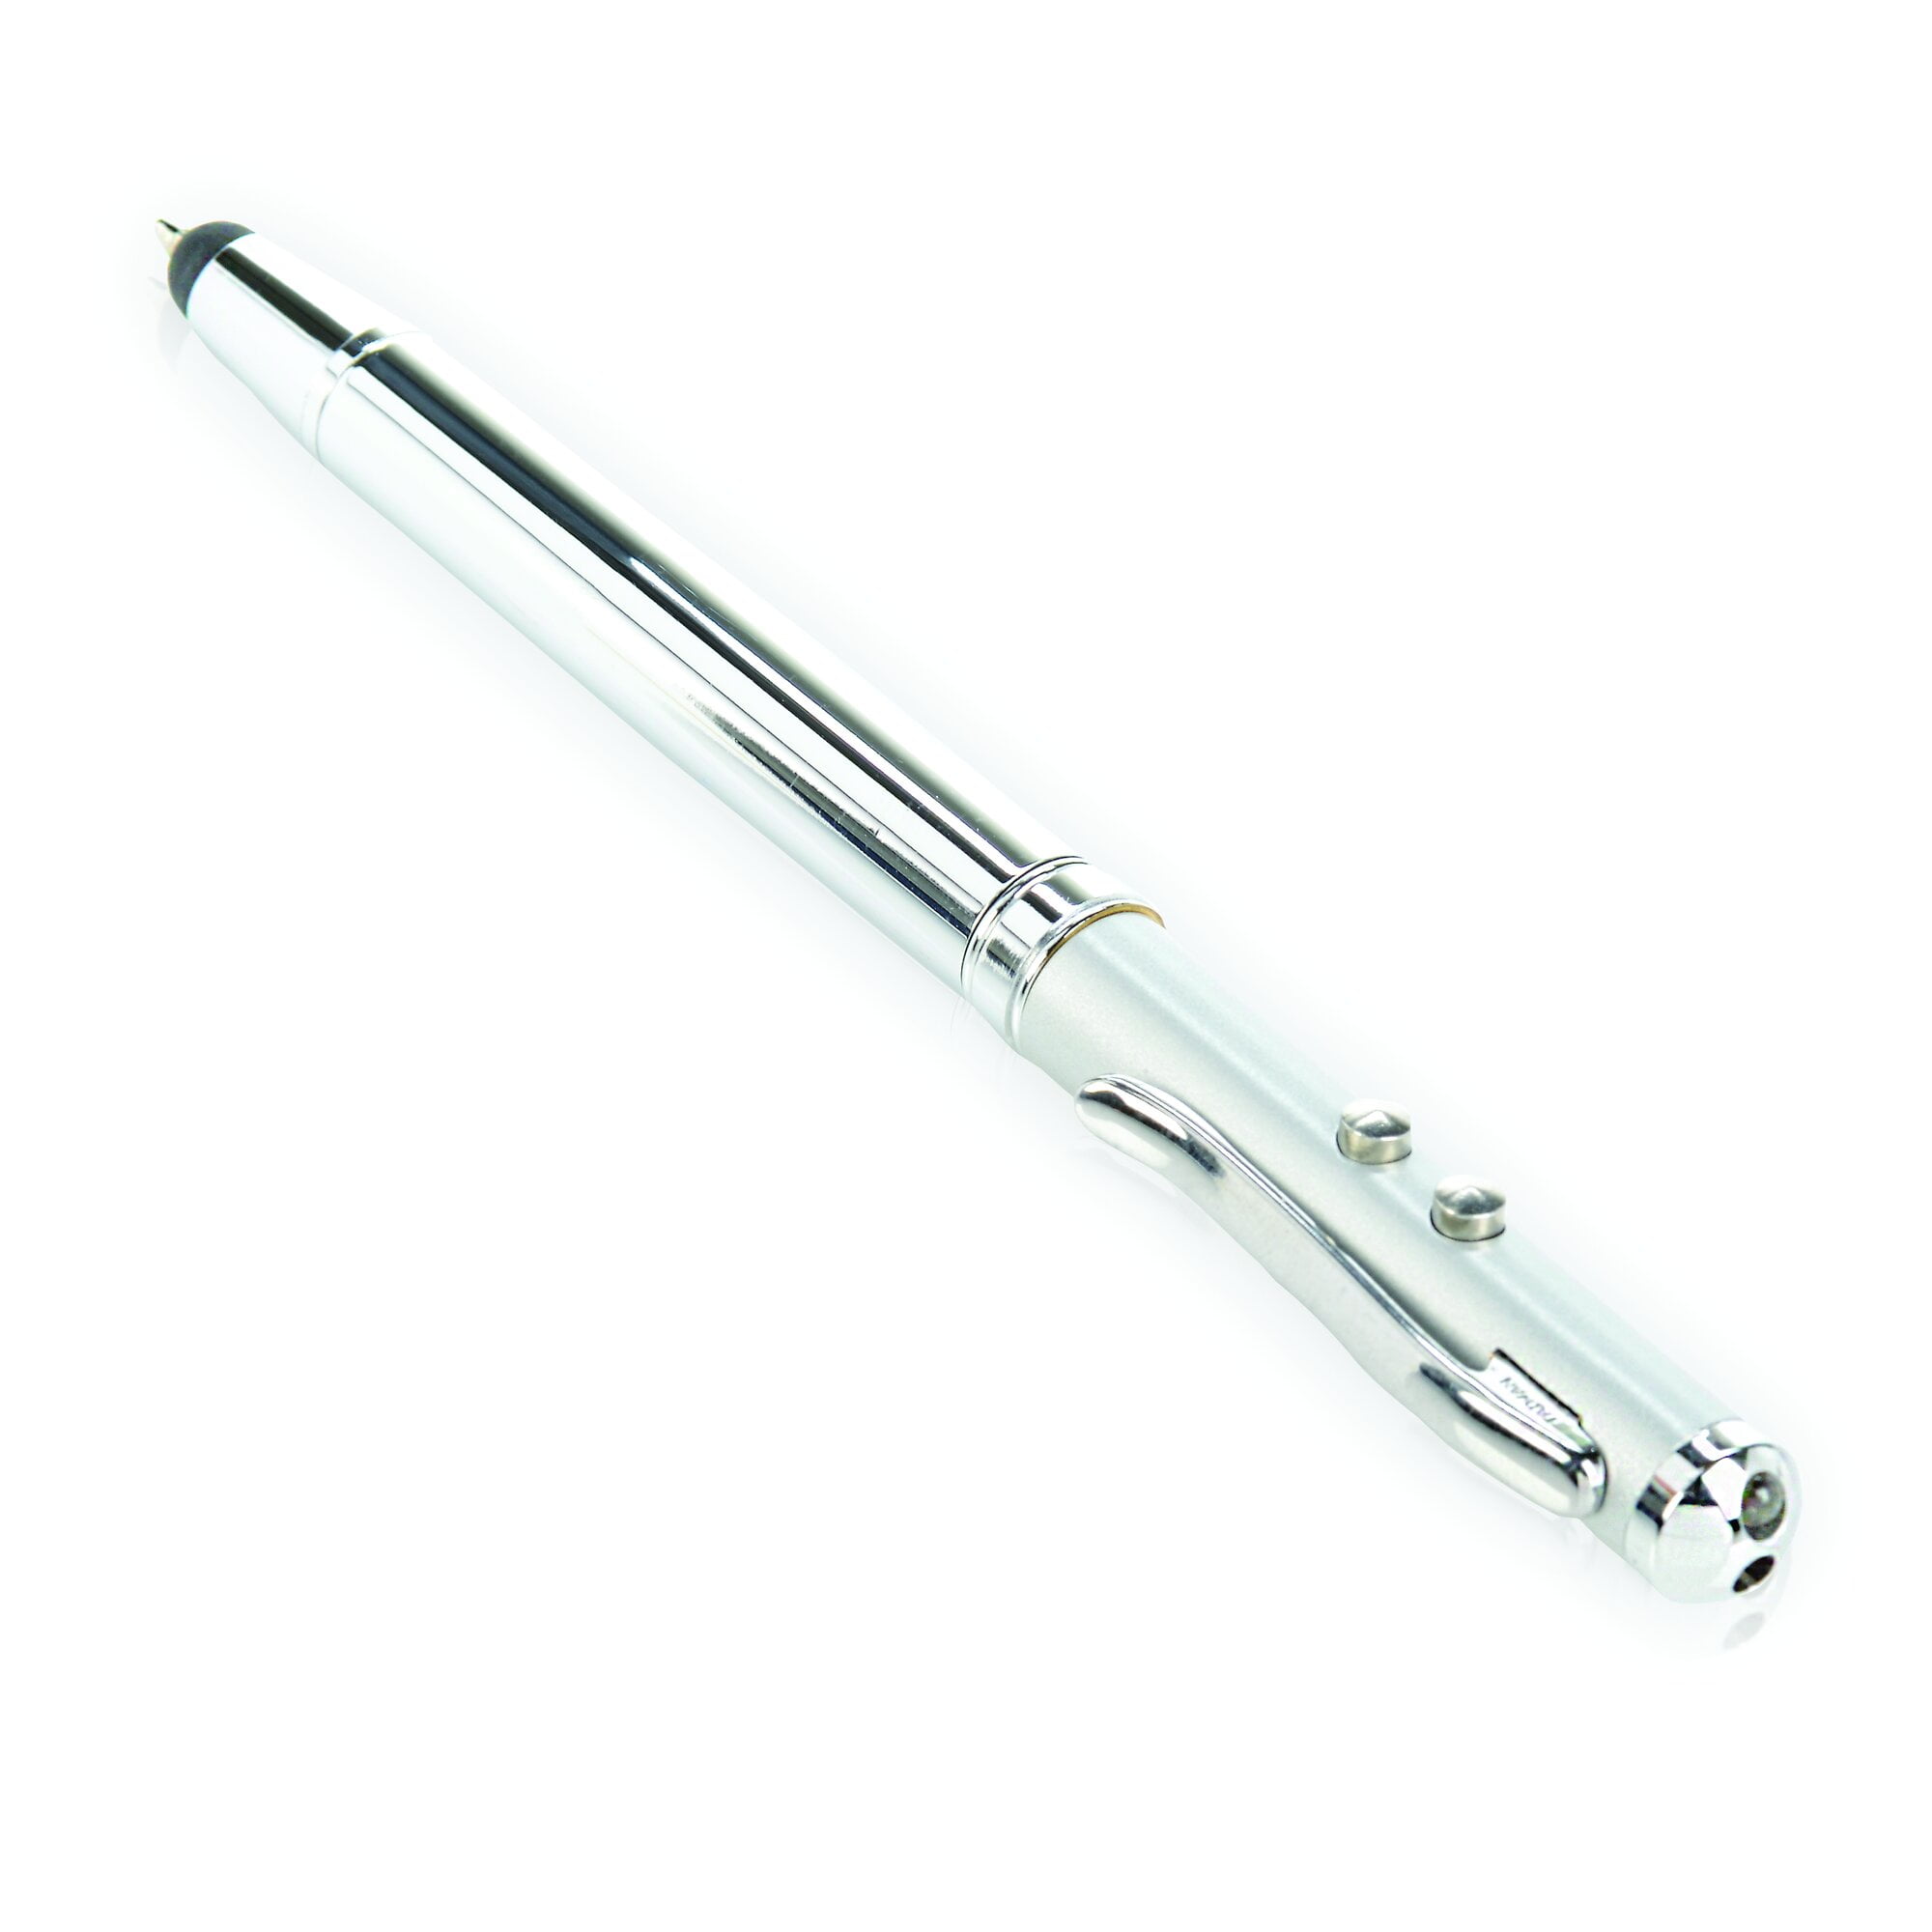 Stylus Pen Laser Pointer with LED Light - PROMOrx